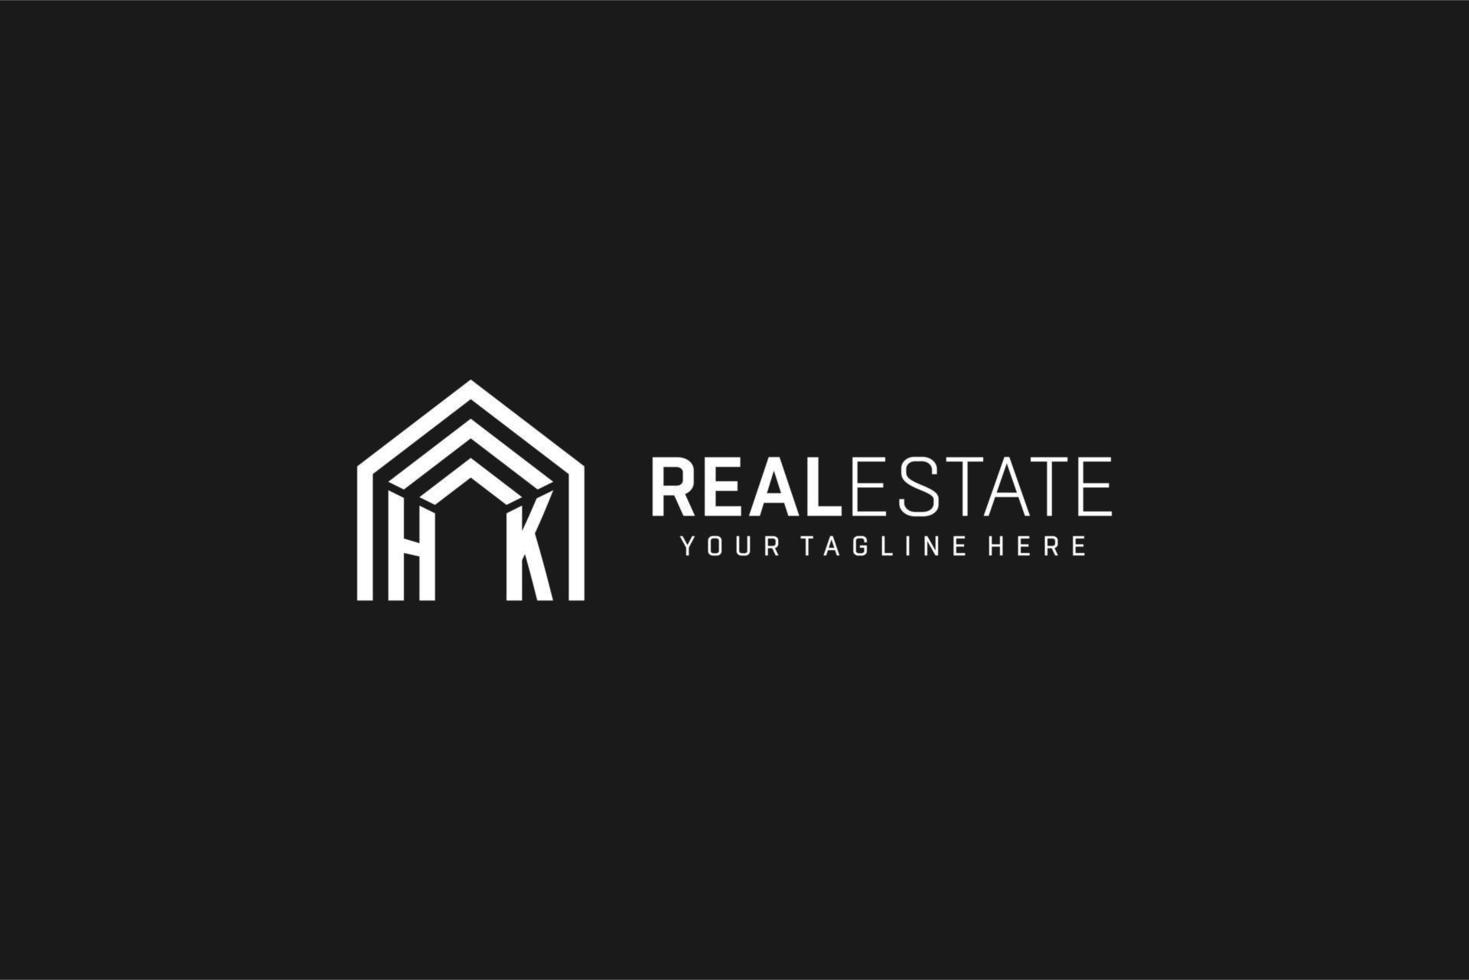 Letter HK house roof shape logo, creative real estate monogram logo style vector